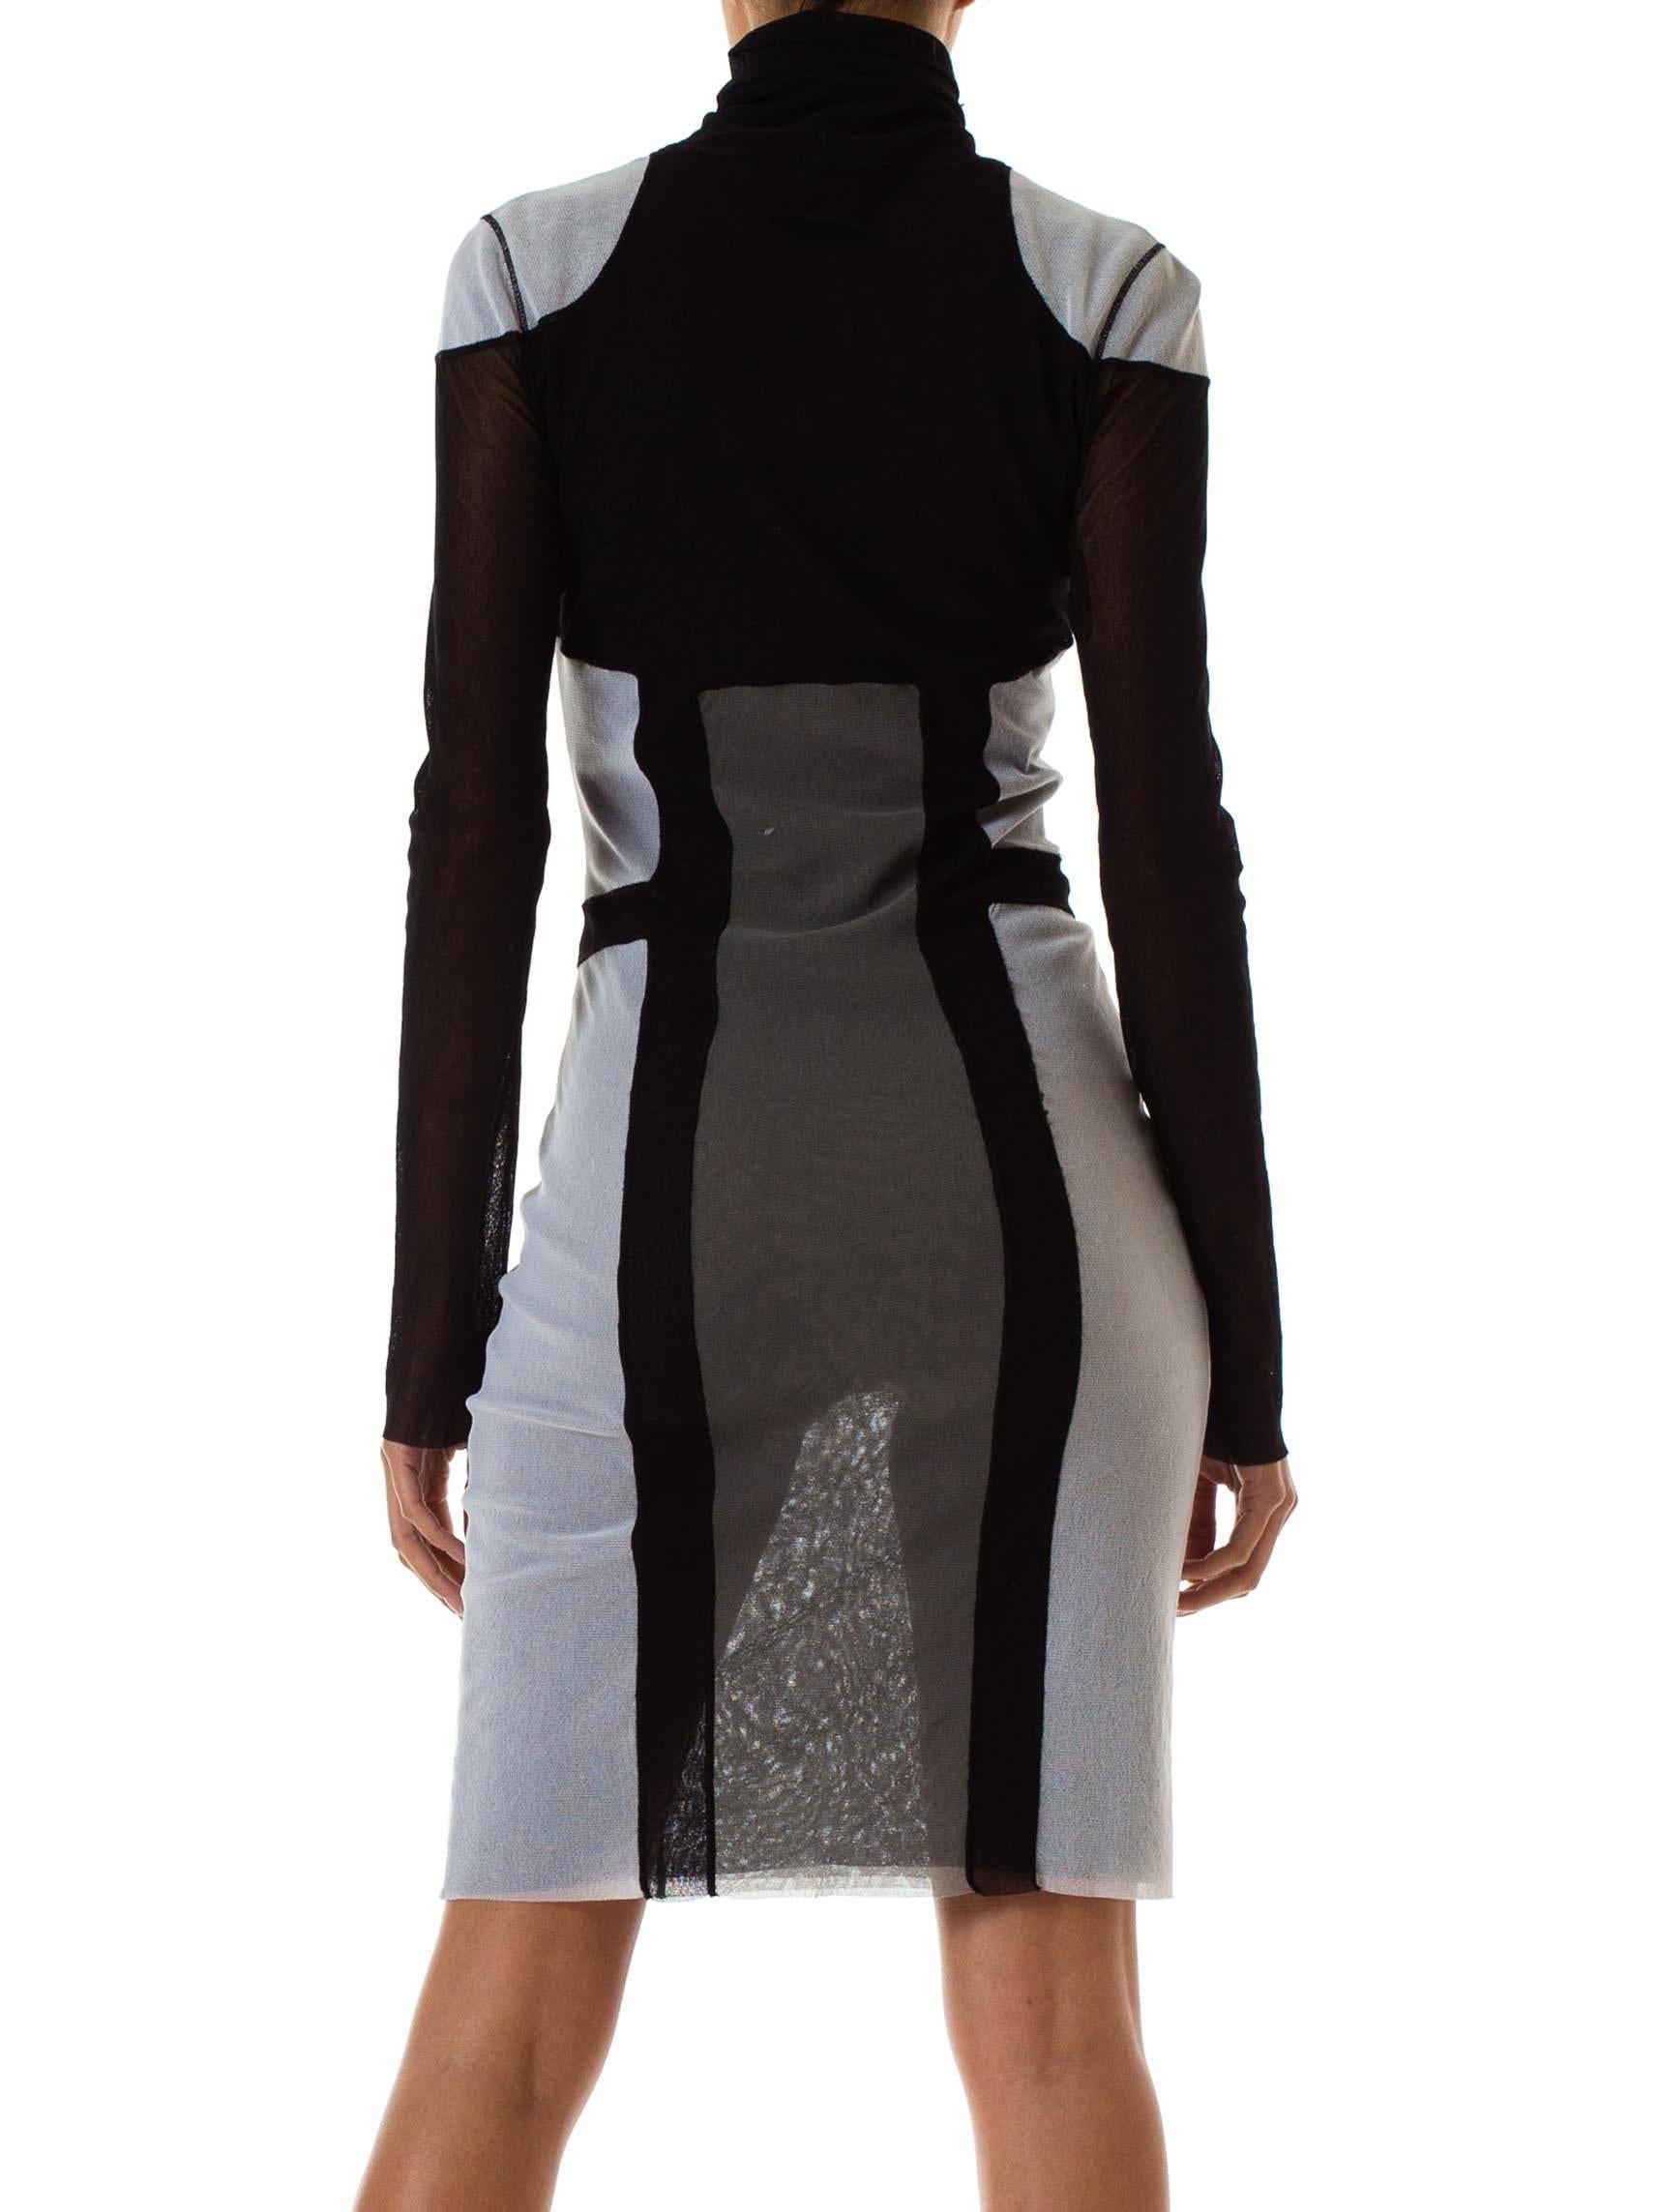 Black Jean Paul Gaultier Robot Dress